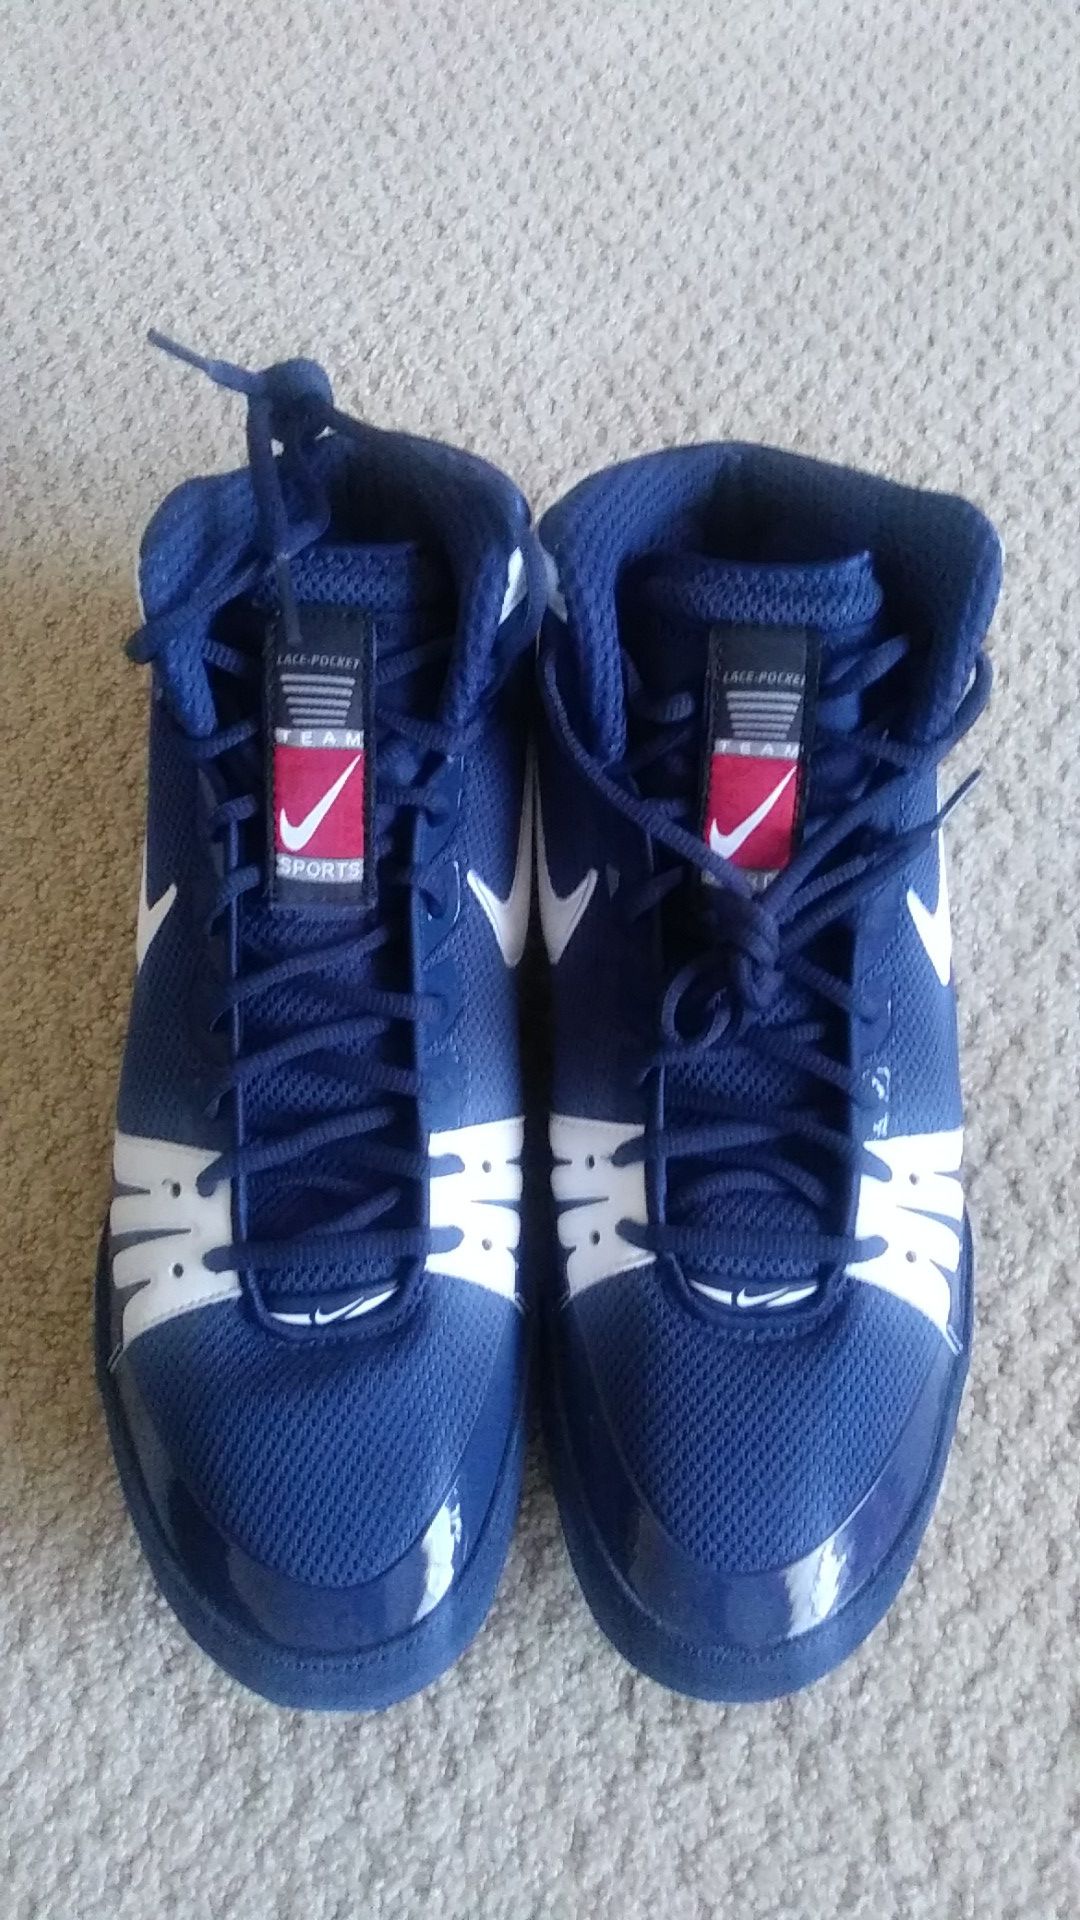 New Nike Freek Wrestling Shoes Navy Blue & White 316403 411 Size 13